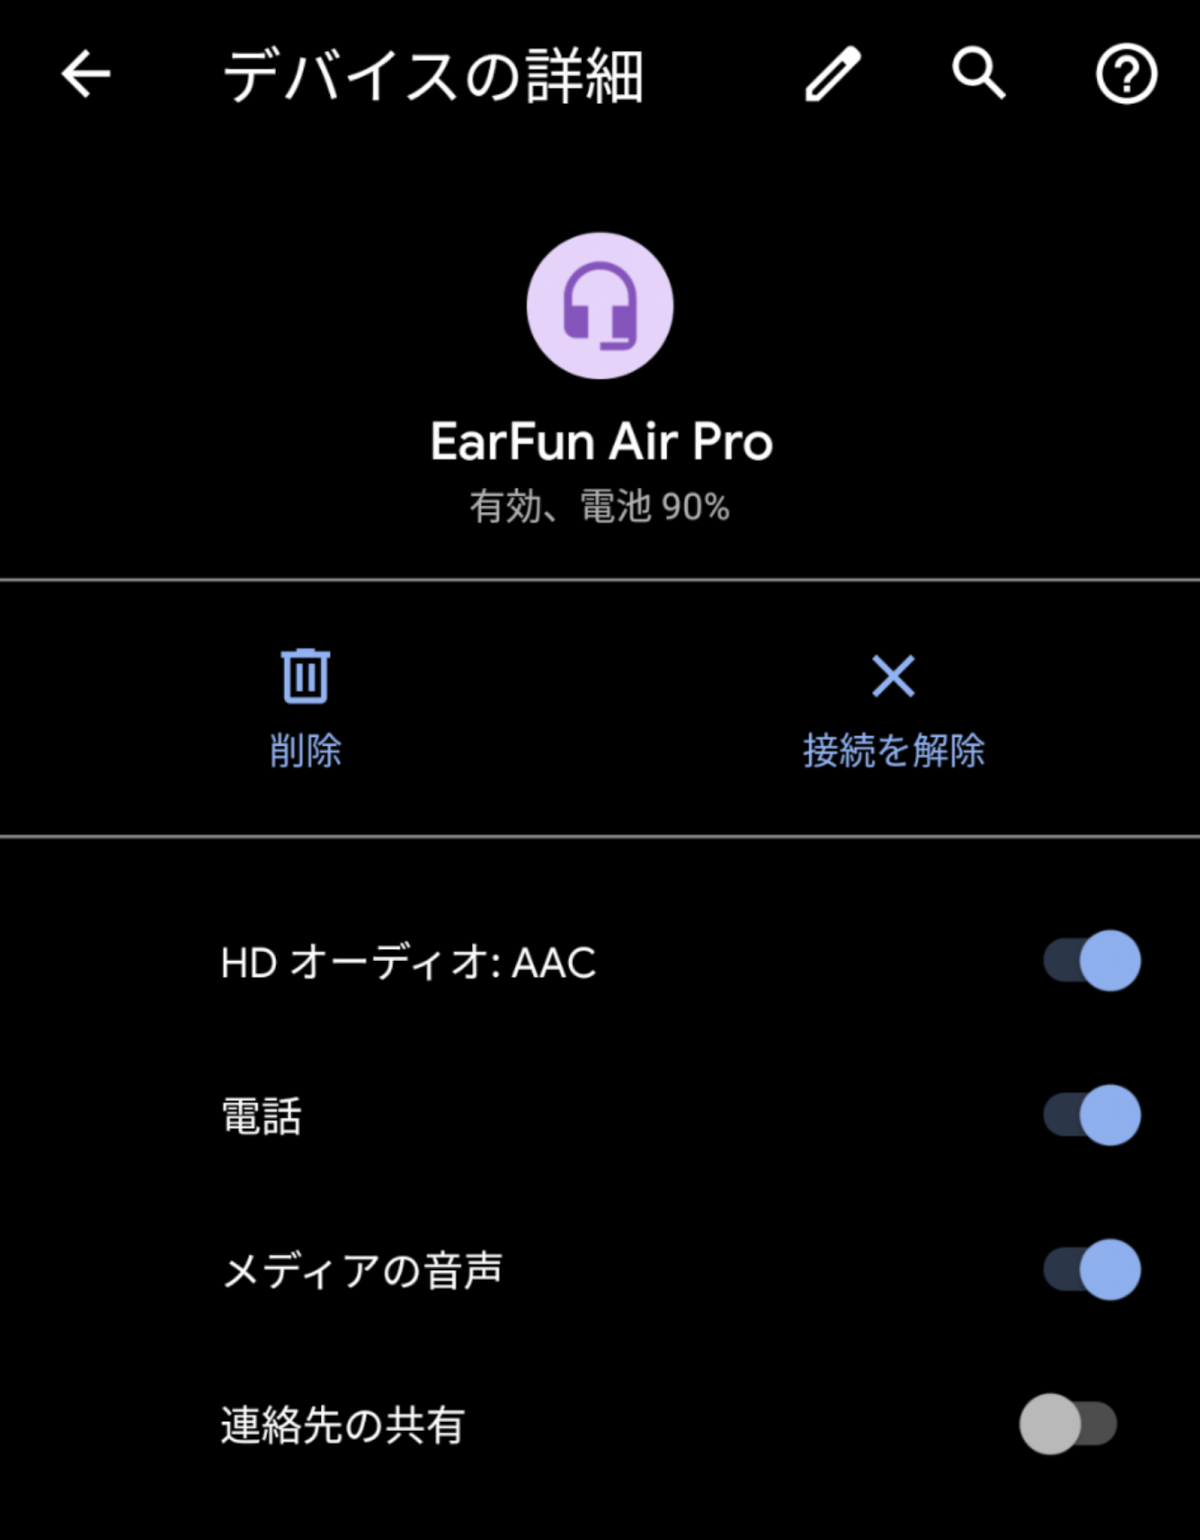 EarFun Air Pro AndroidスマホにBluetooth接続した様子。AAC接続